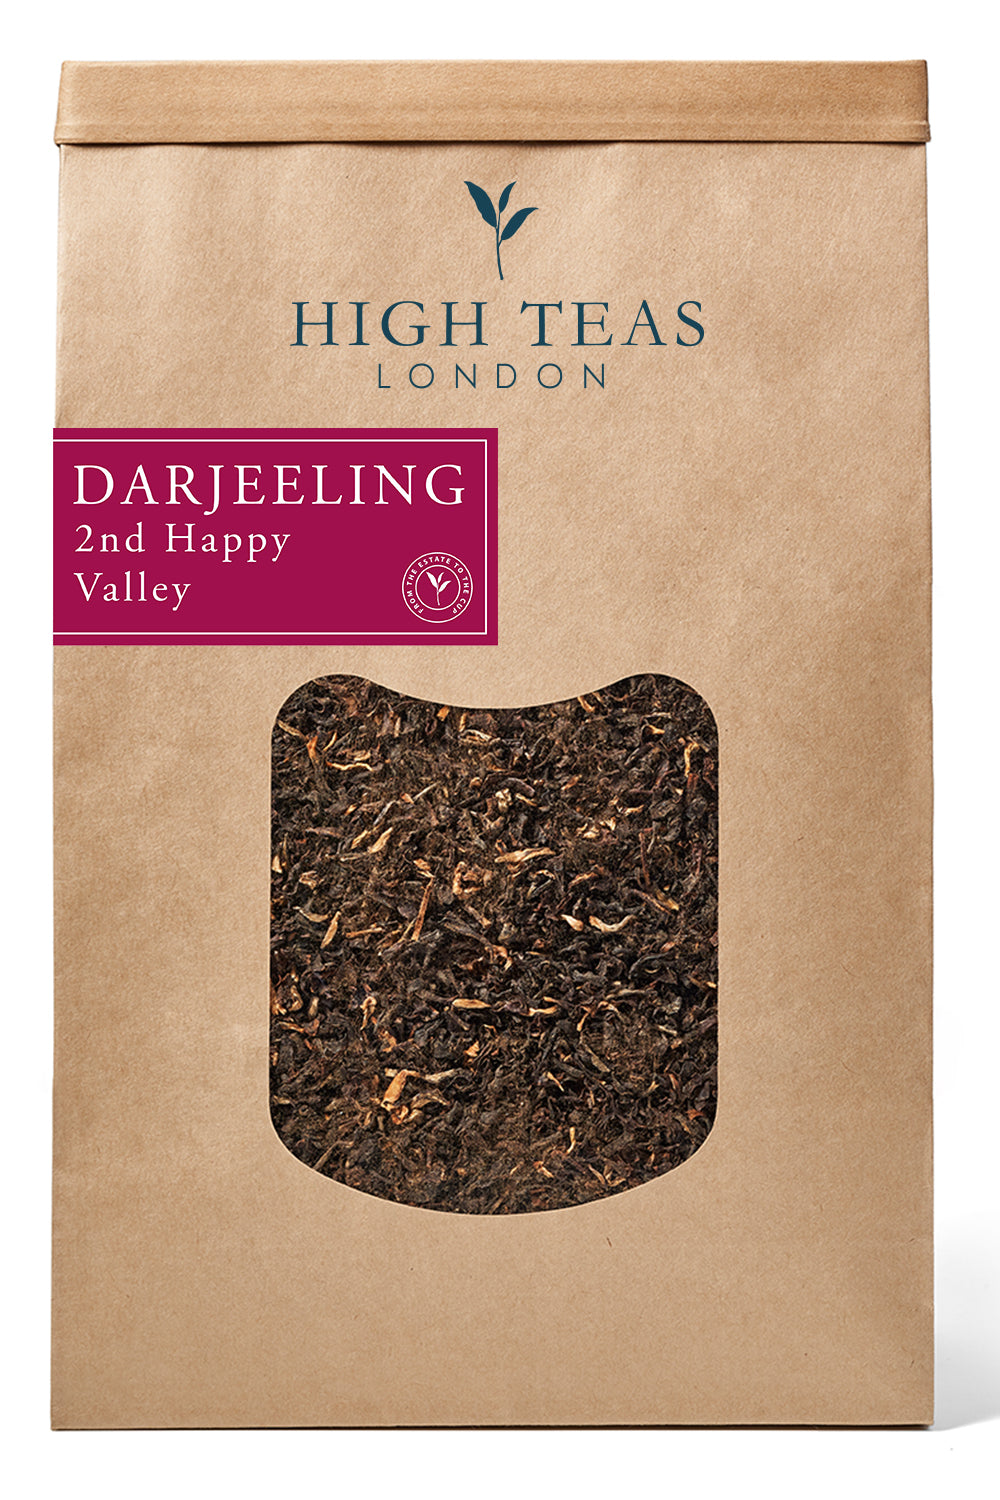 Darjeeling 2nd Happy Valley FTGFOP1-500g-Loose Leaf Tea-High Teas